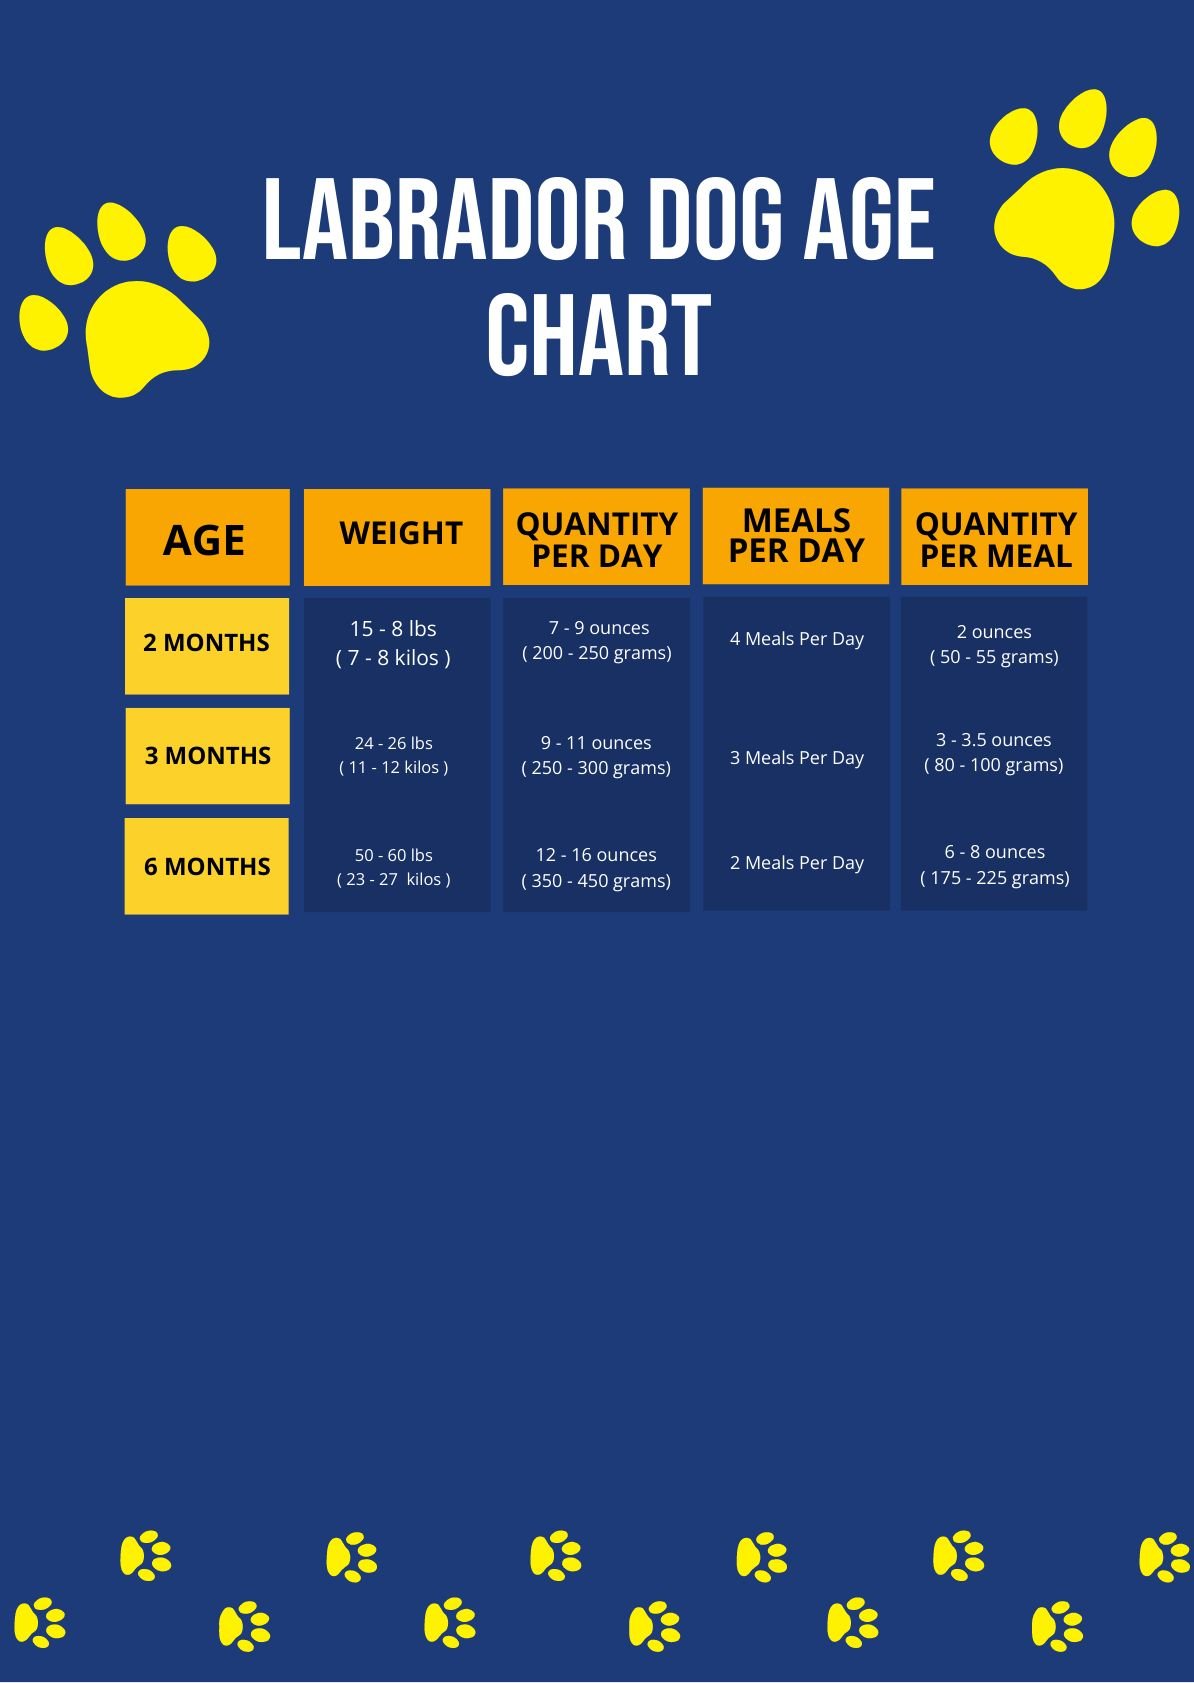 Labrador Dog Age Chart in PDF